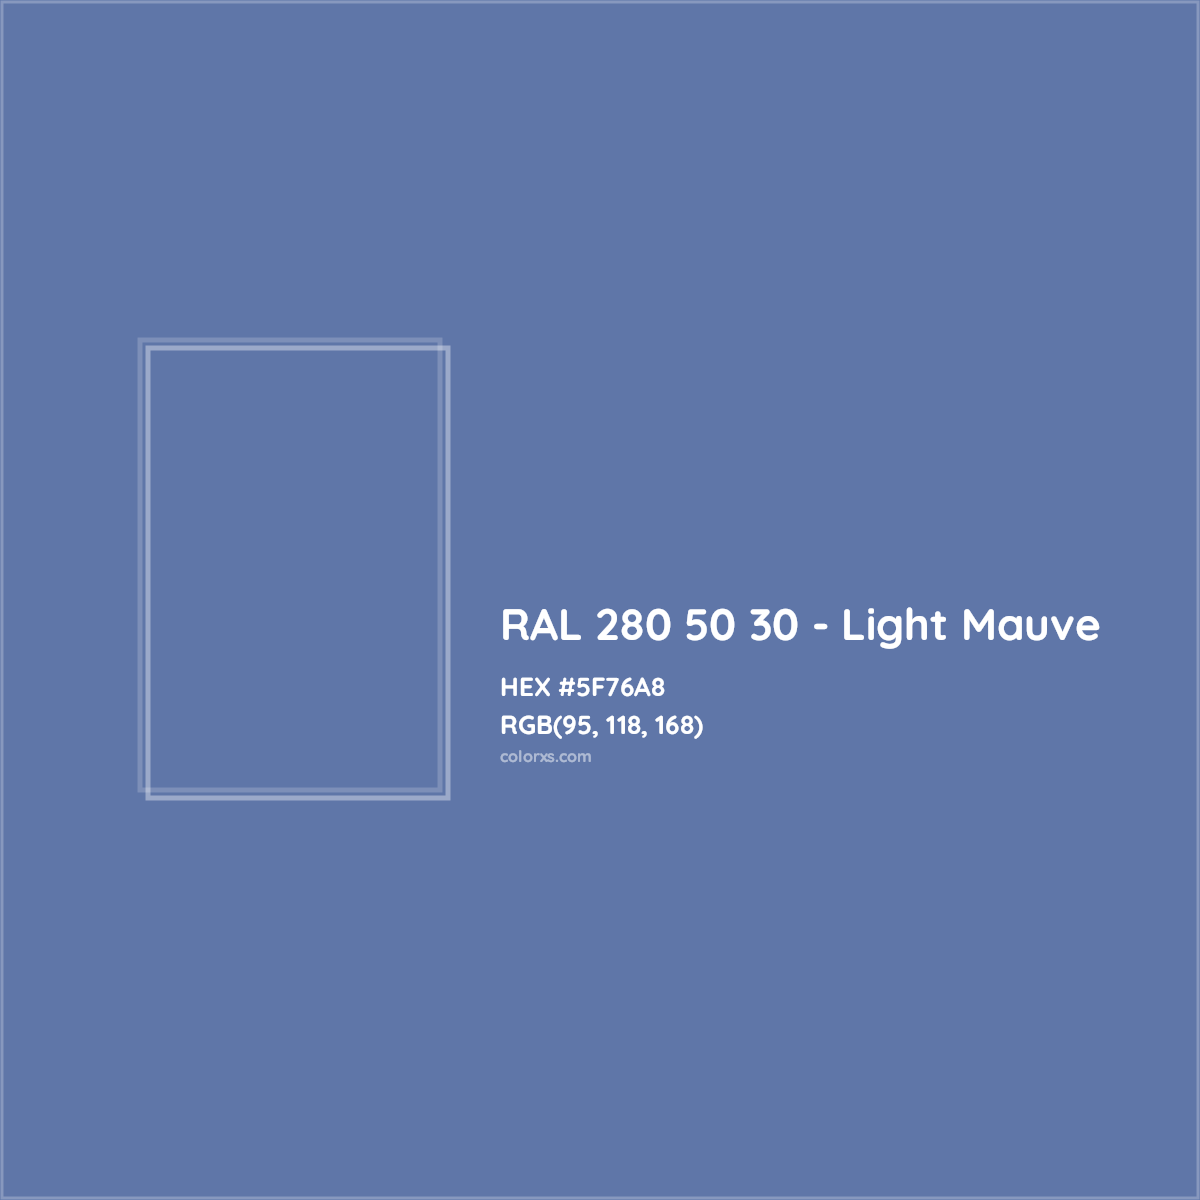 HEX #5F76A8 RAL 280 50 30 - Light Mauve CMS RAL Design - Color Code